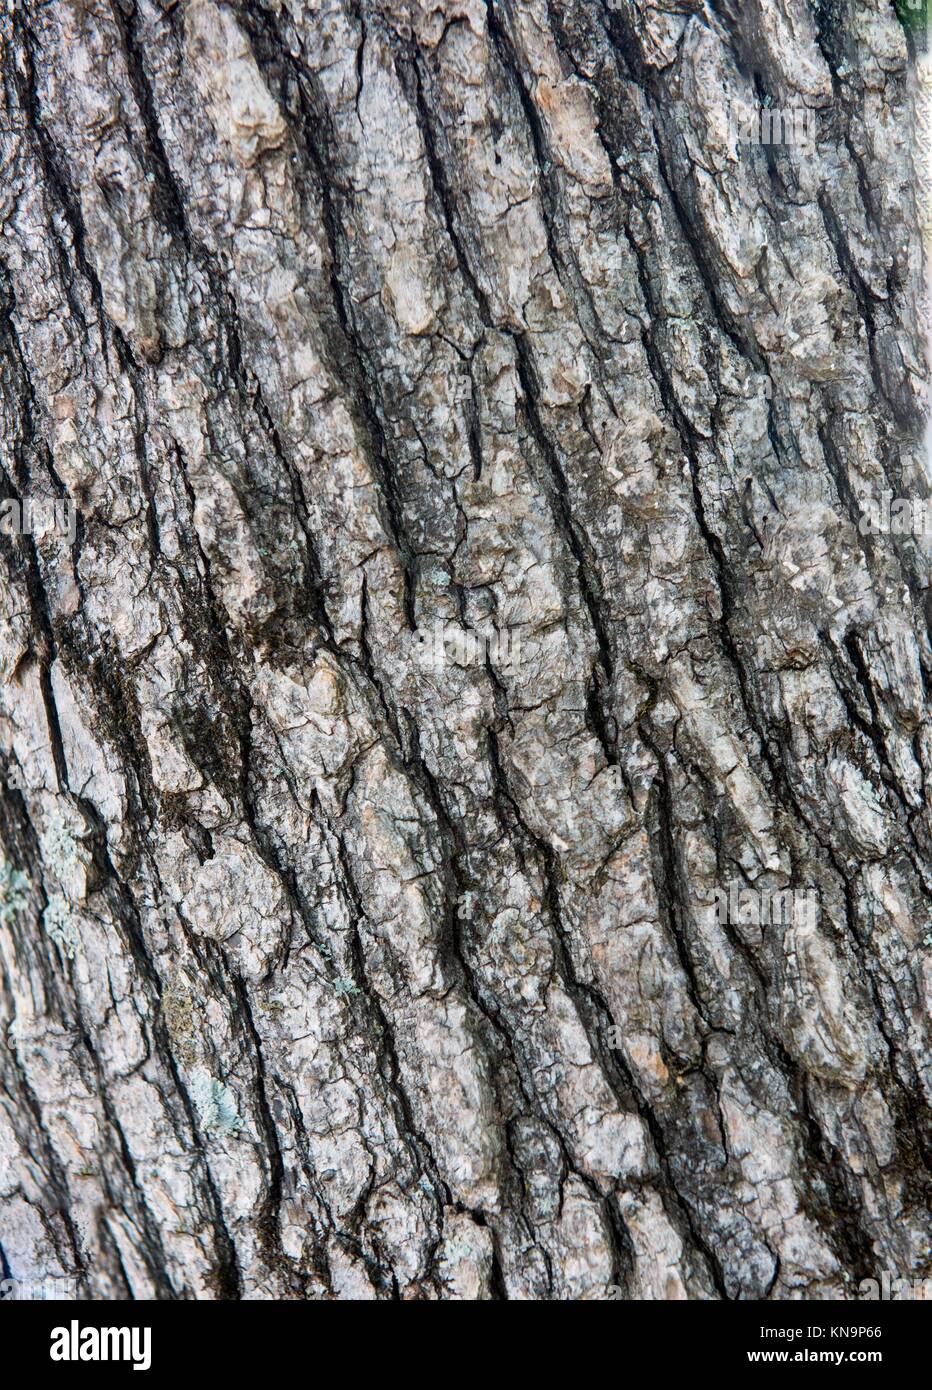 Close up photo of a tree bark texture. Stock Photo